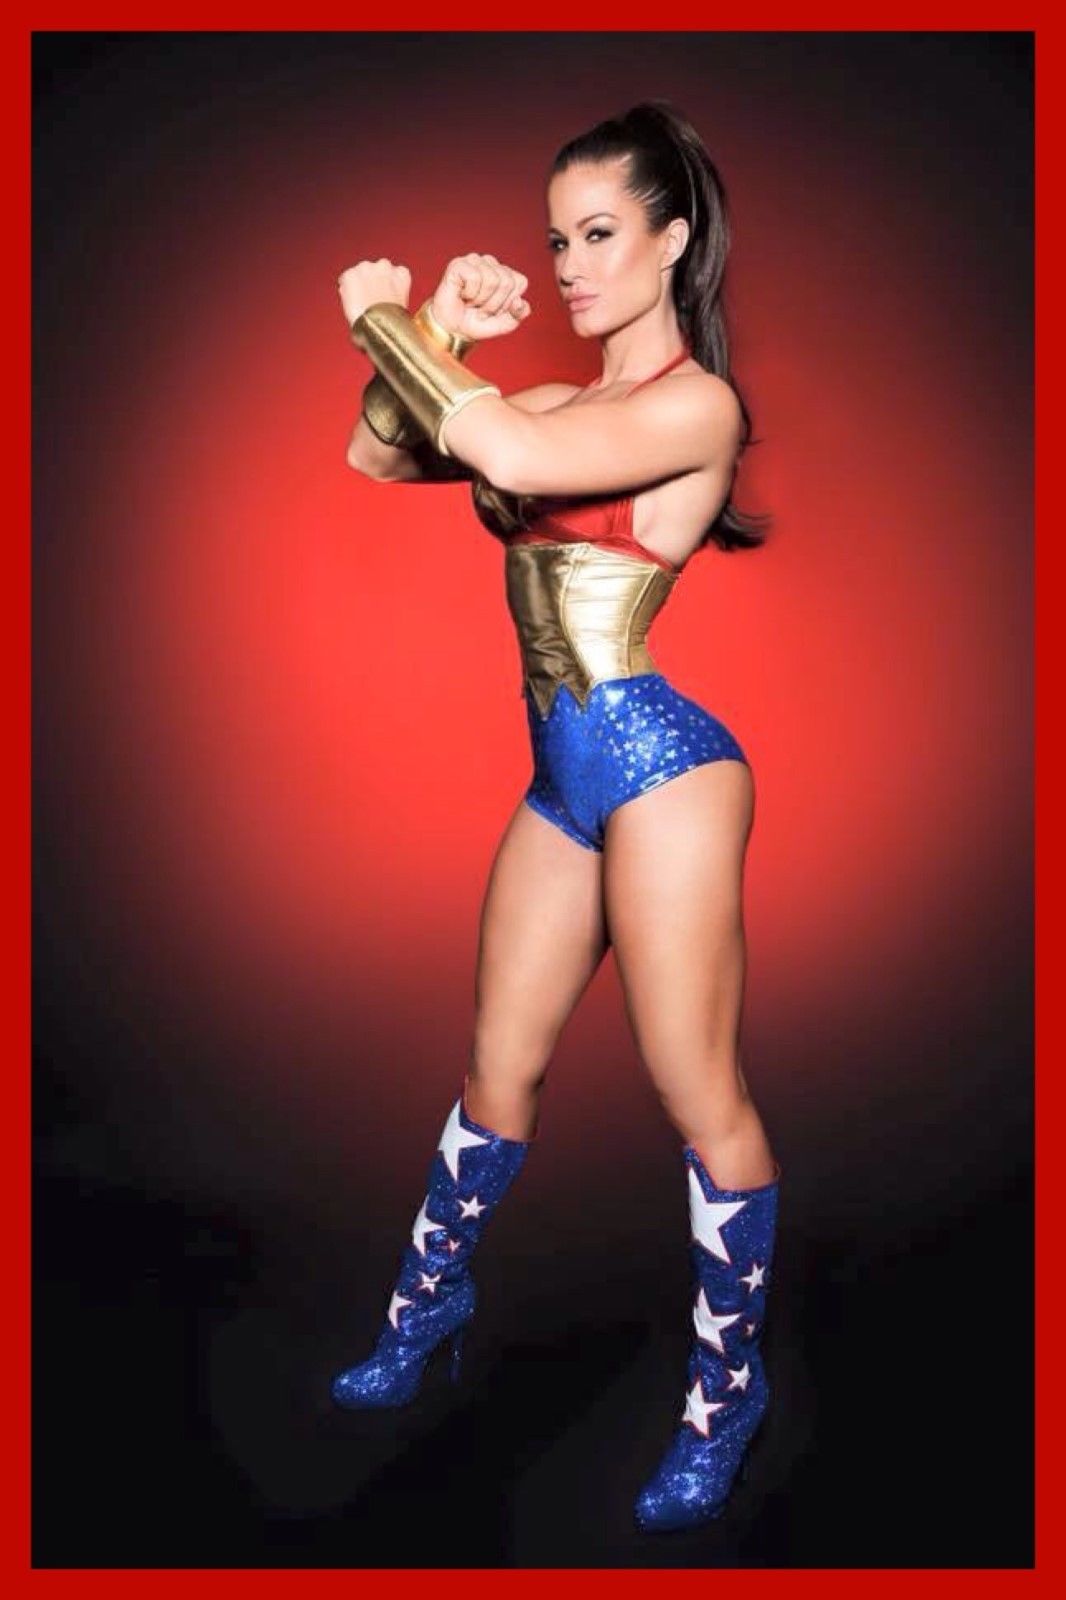 Brooke Adams Looks Alright As Wonder Woman